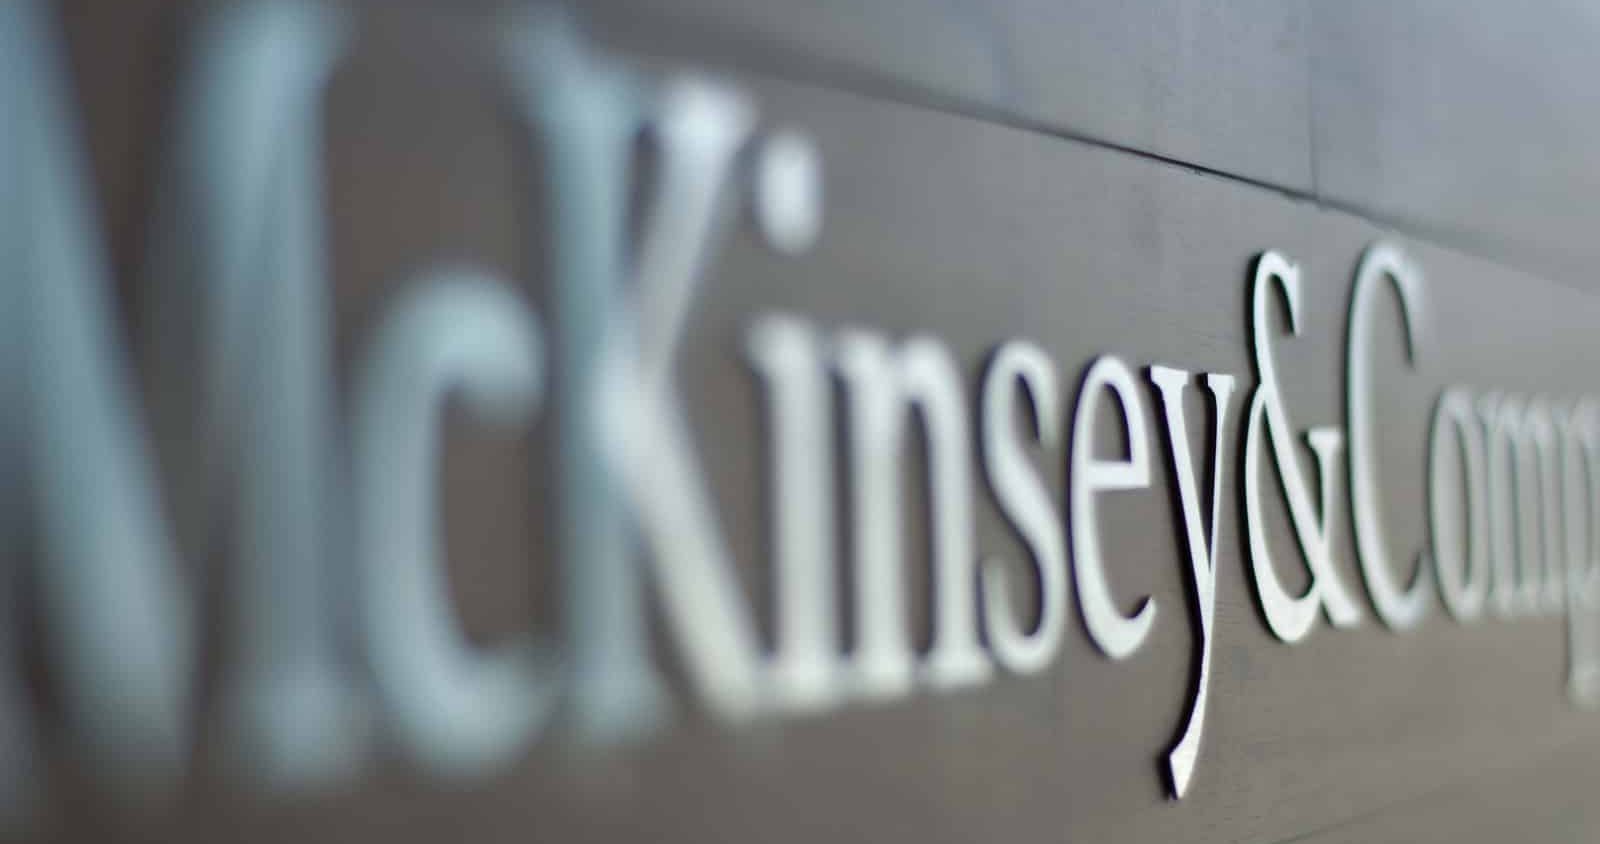 McKinsey: Παλεύει για την επανεκλογή του ο CEO, Μπομπ Στέρνφελς